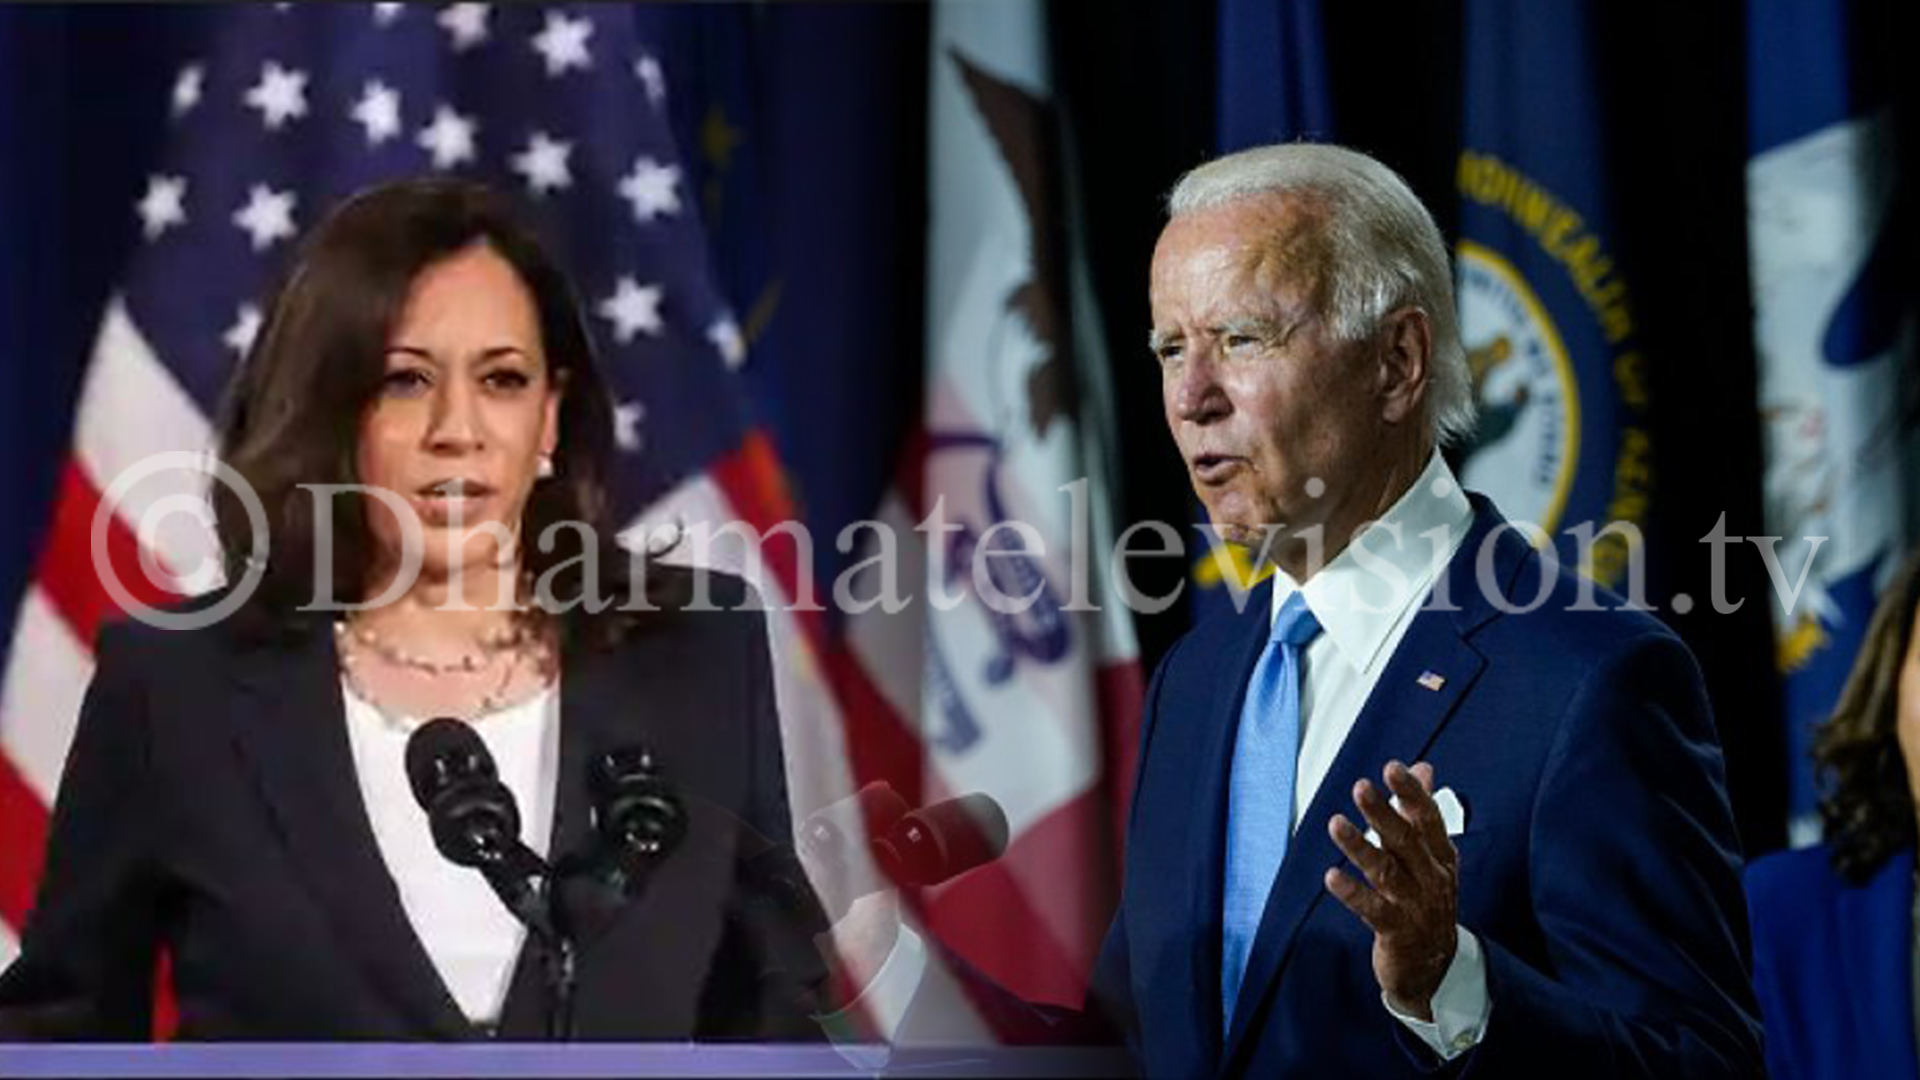 Republican senator seeking re-election mocks Biden’s running mate, Kamala Harris’ name